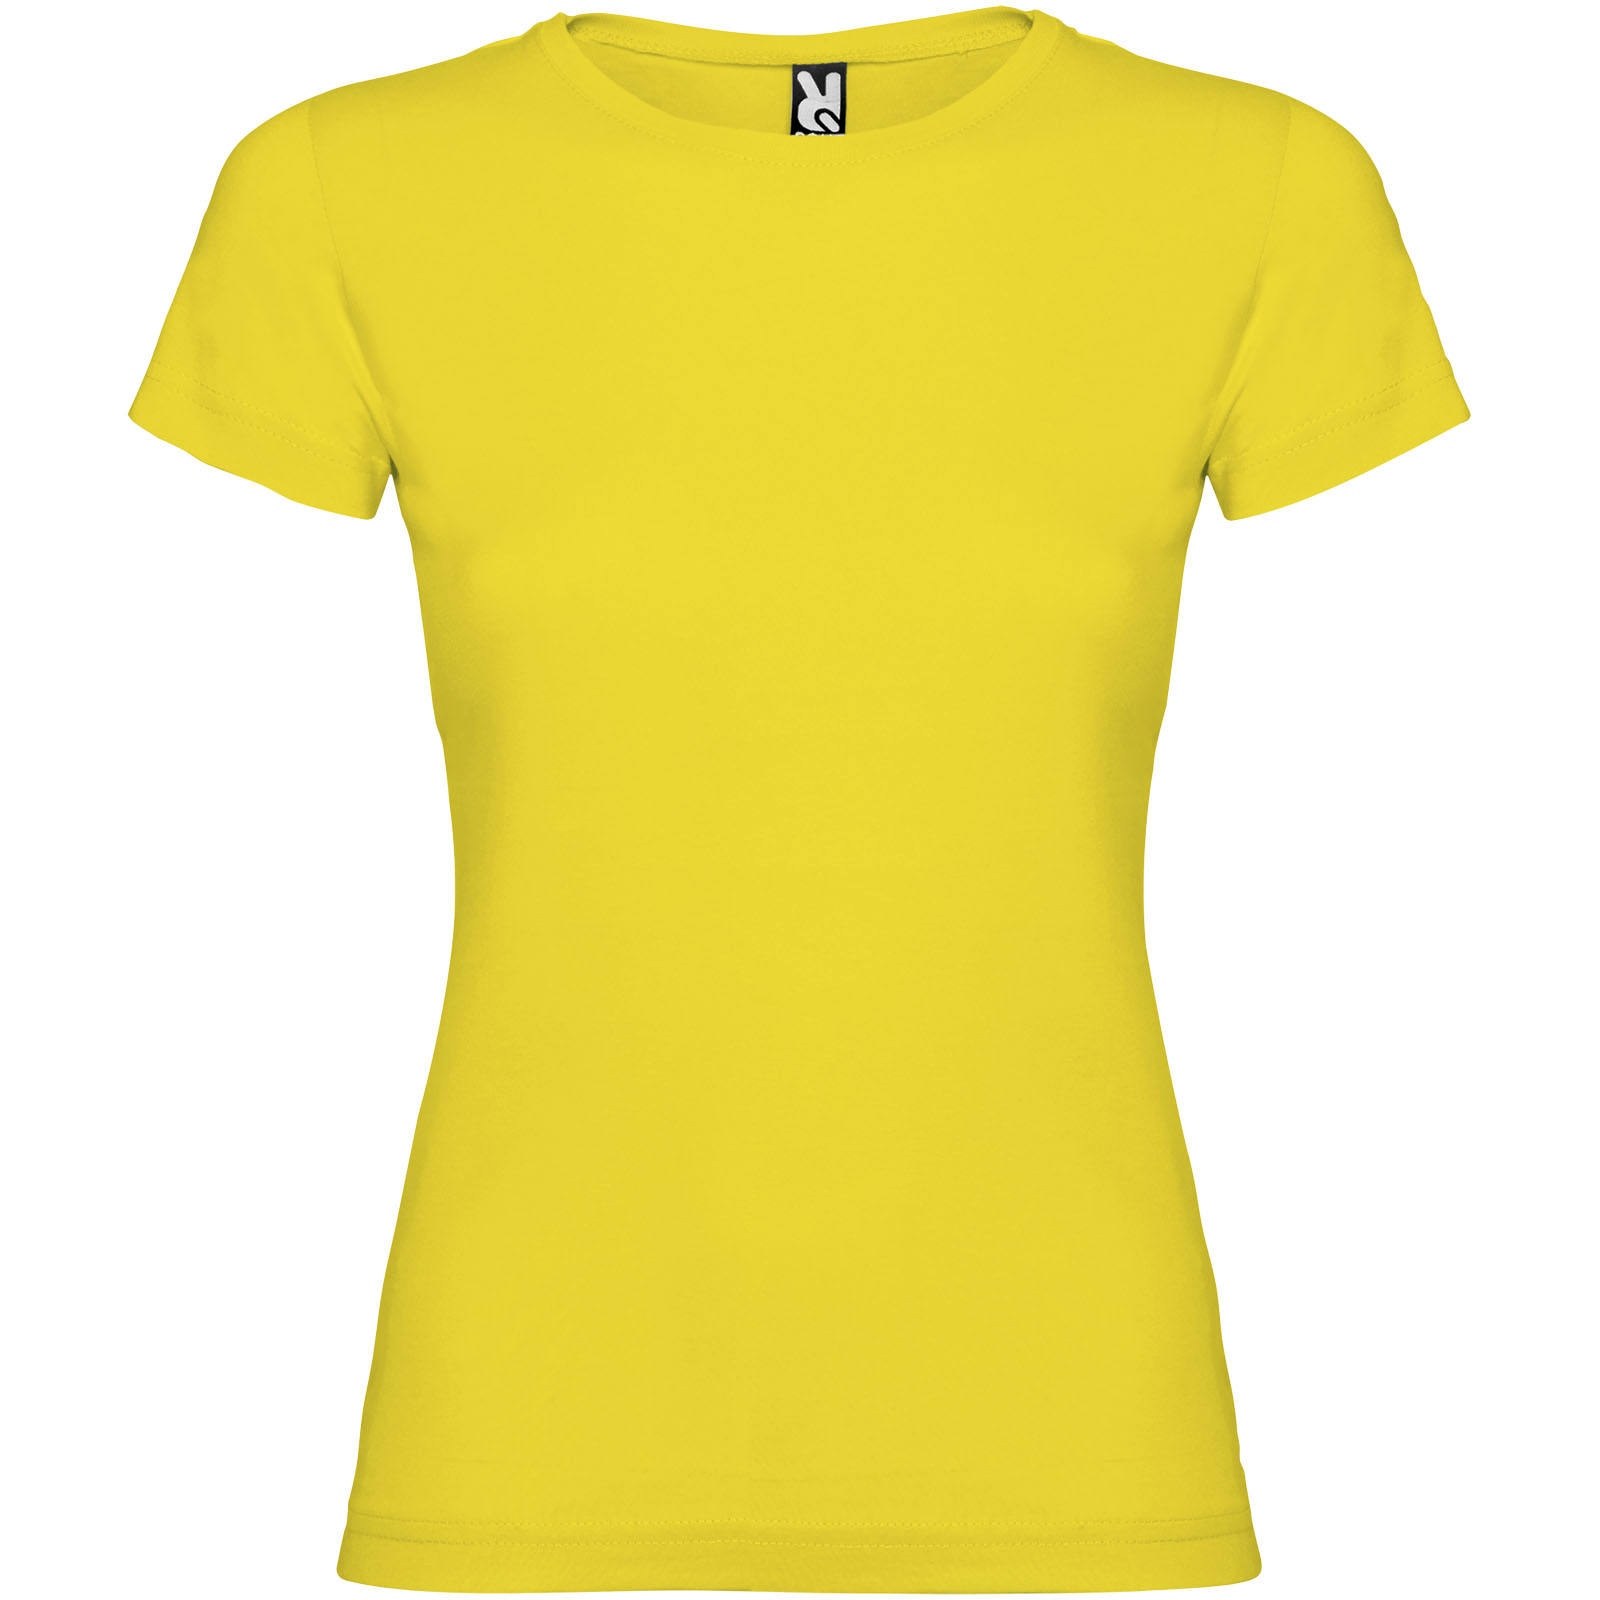 Clothing - Jamaica short sleeve women's t-shirt